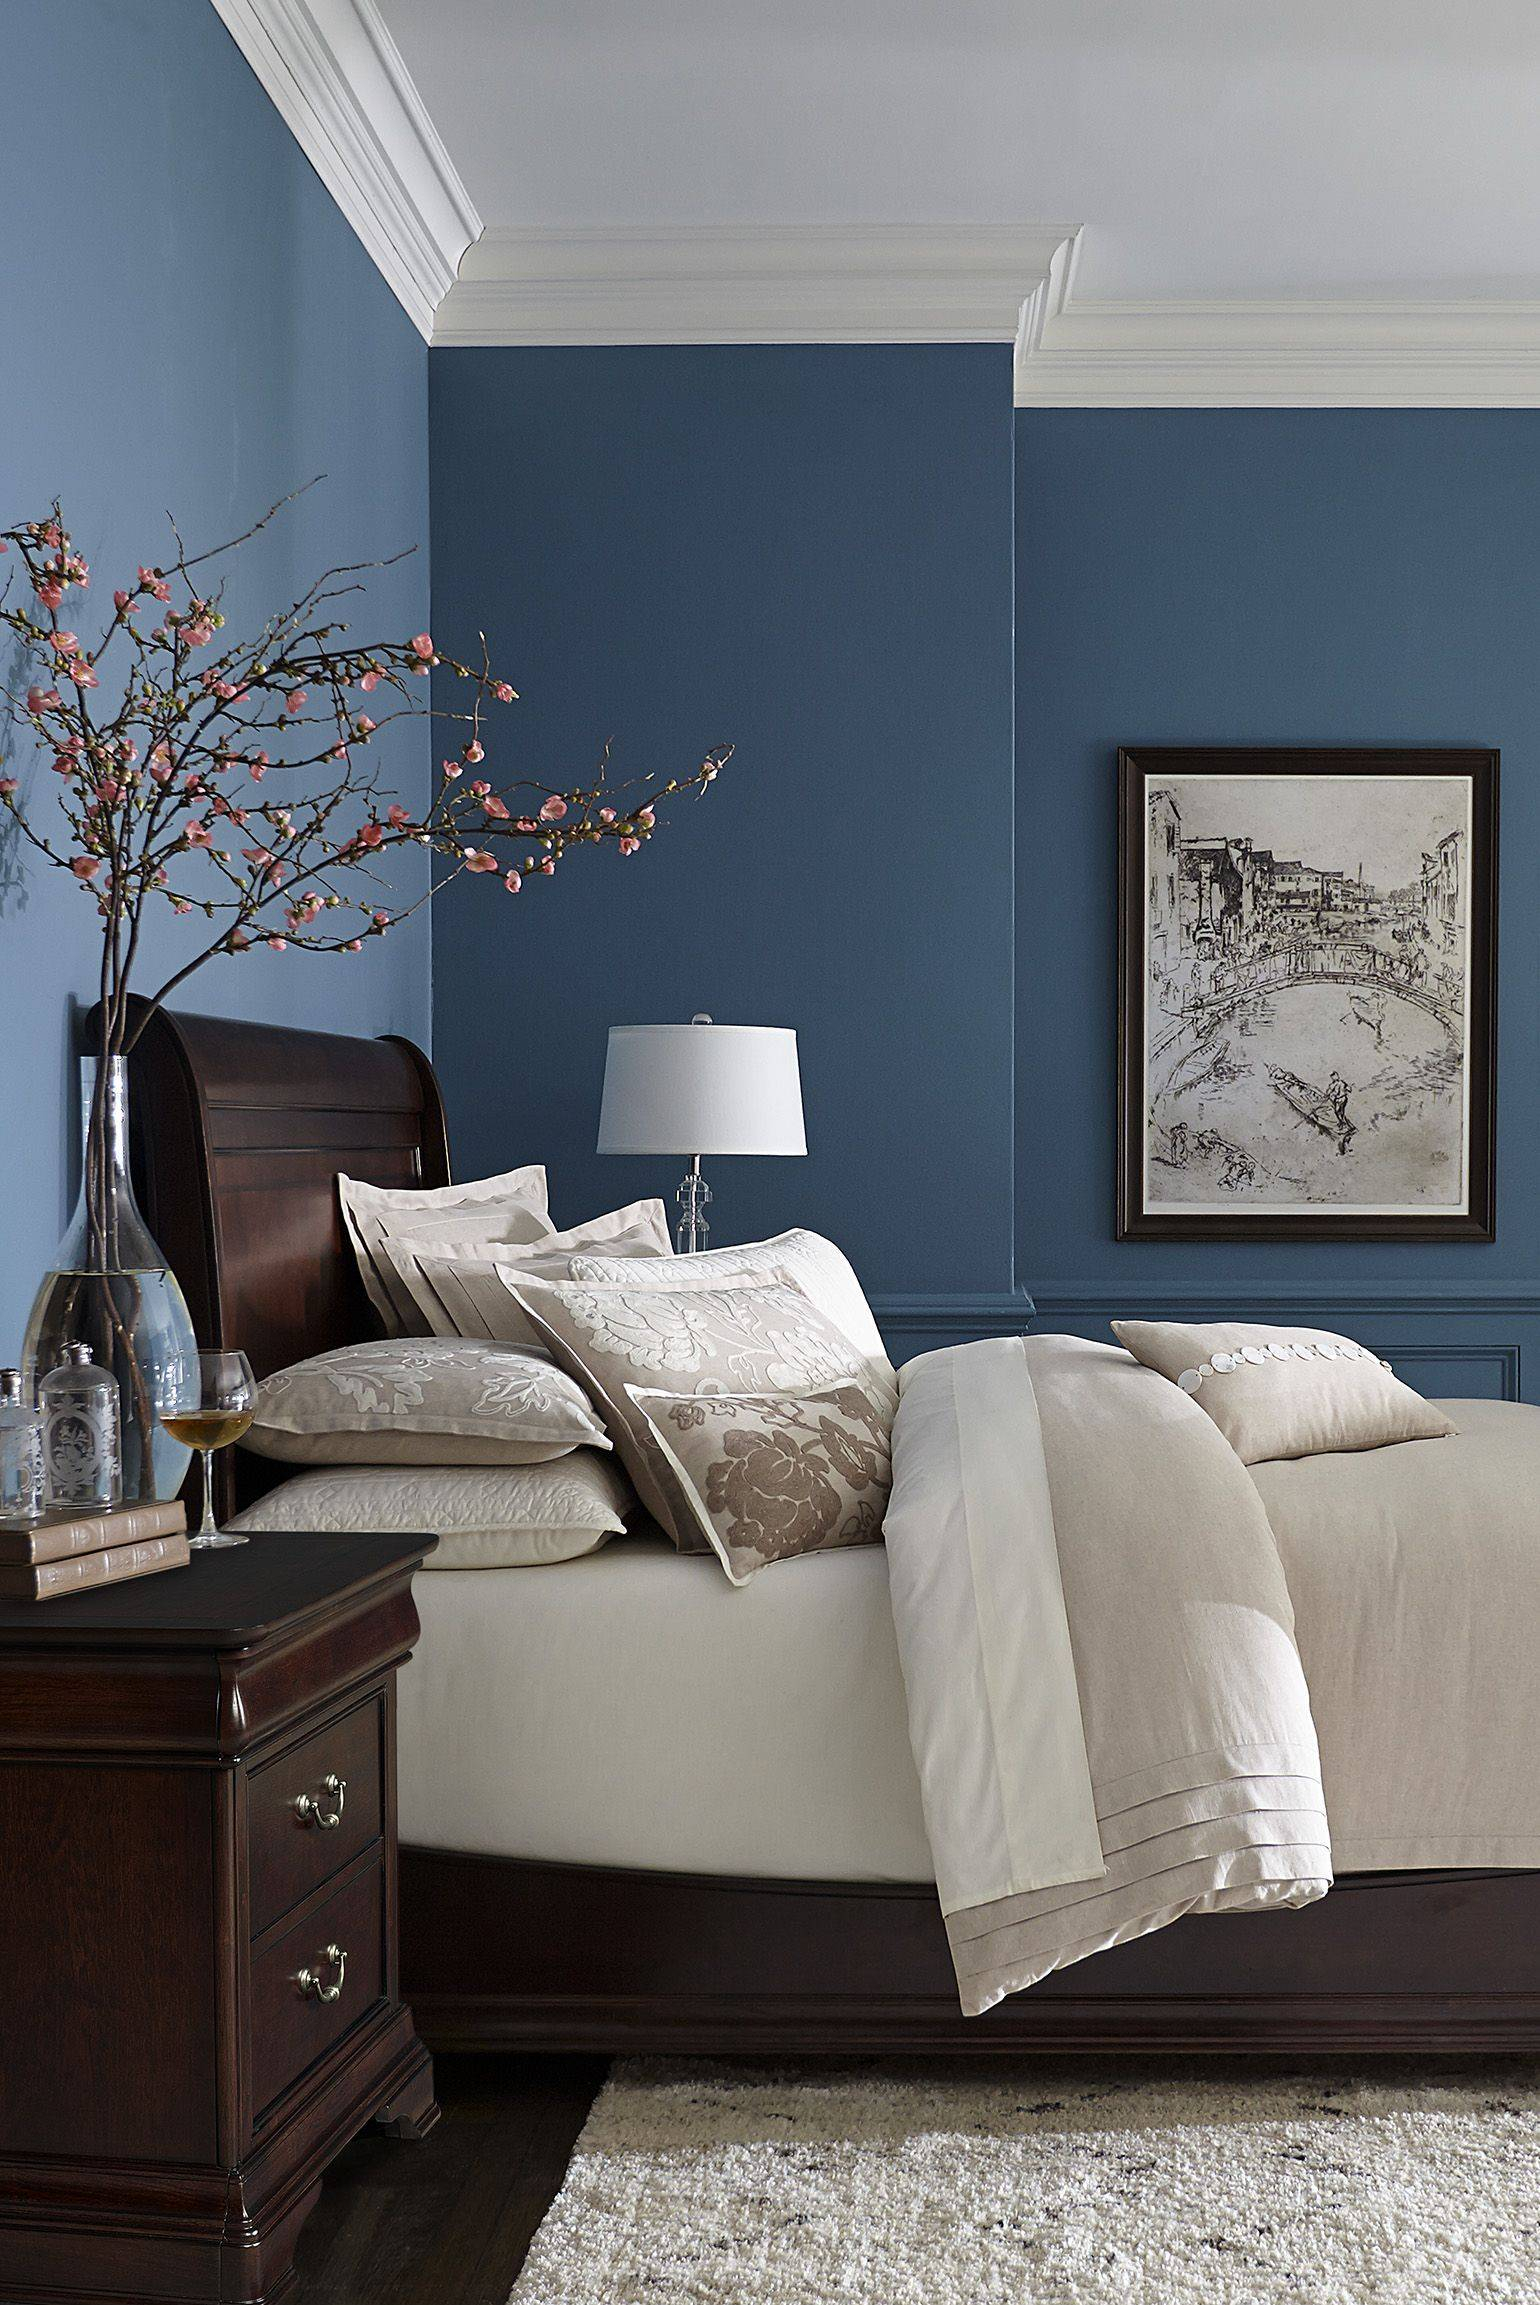 Best Paint Color For Bedroom Walls Neutral Colors Interior regarding measurements 1540 X 2305